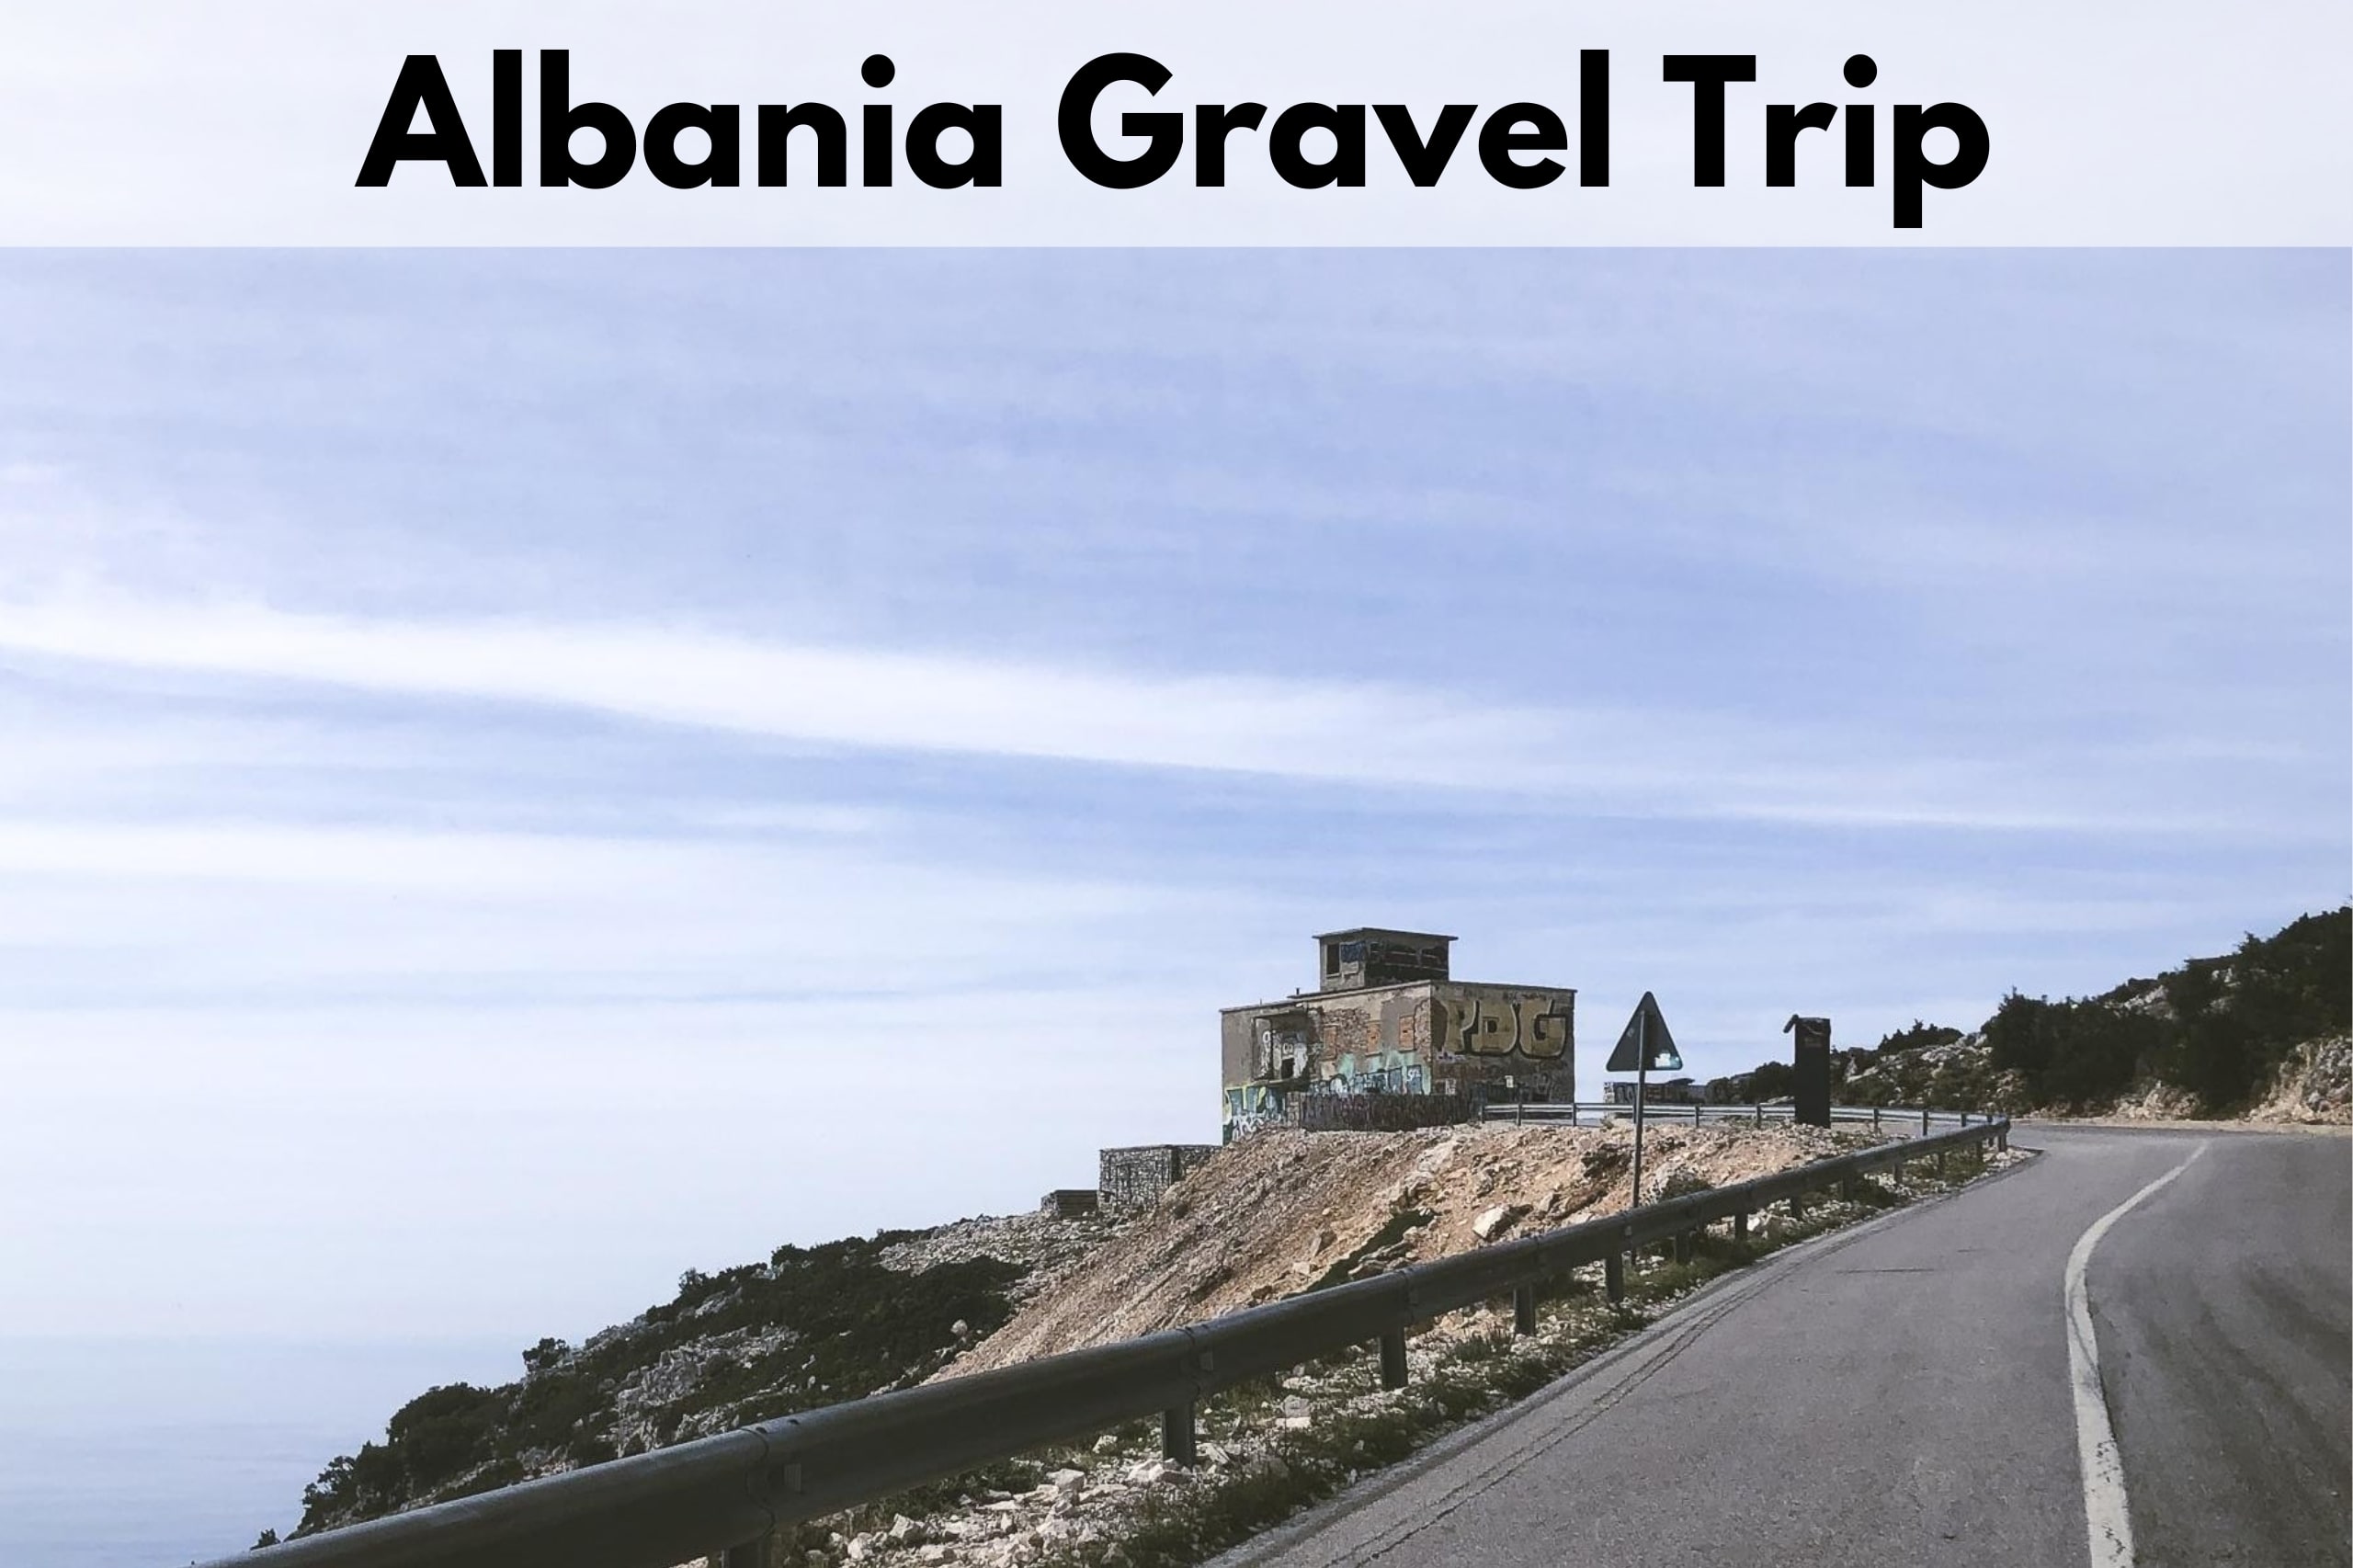 Albania Gravel Trip